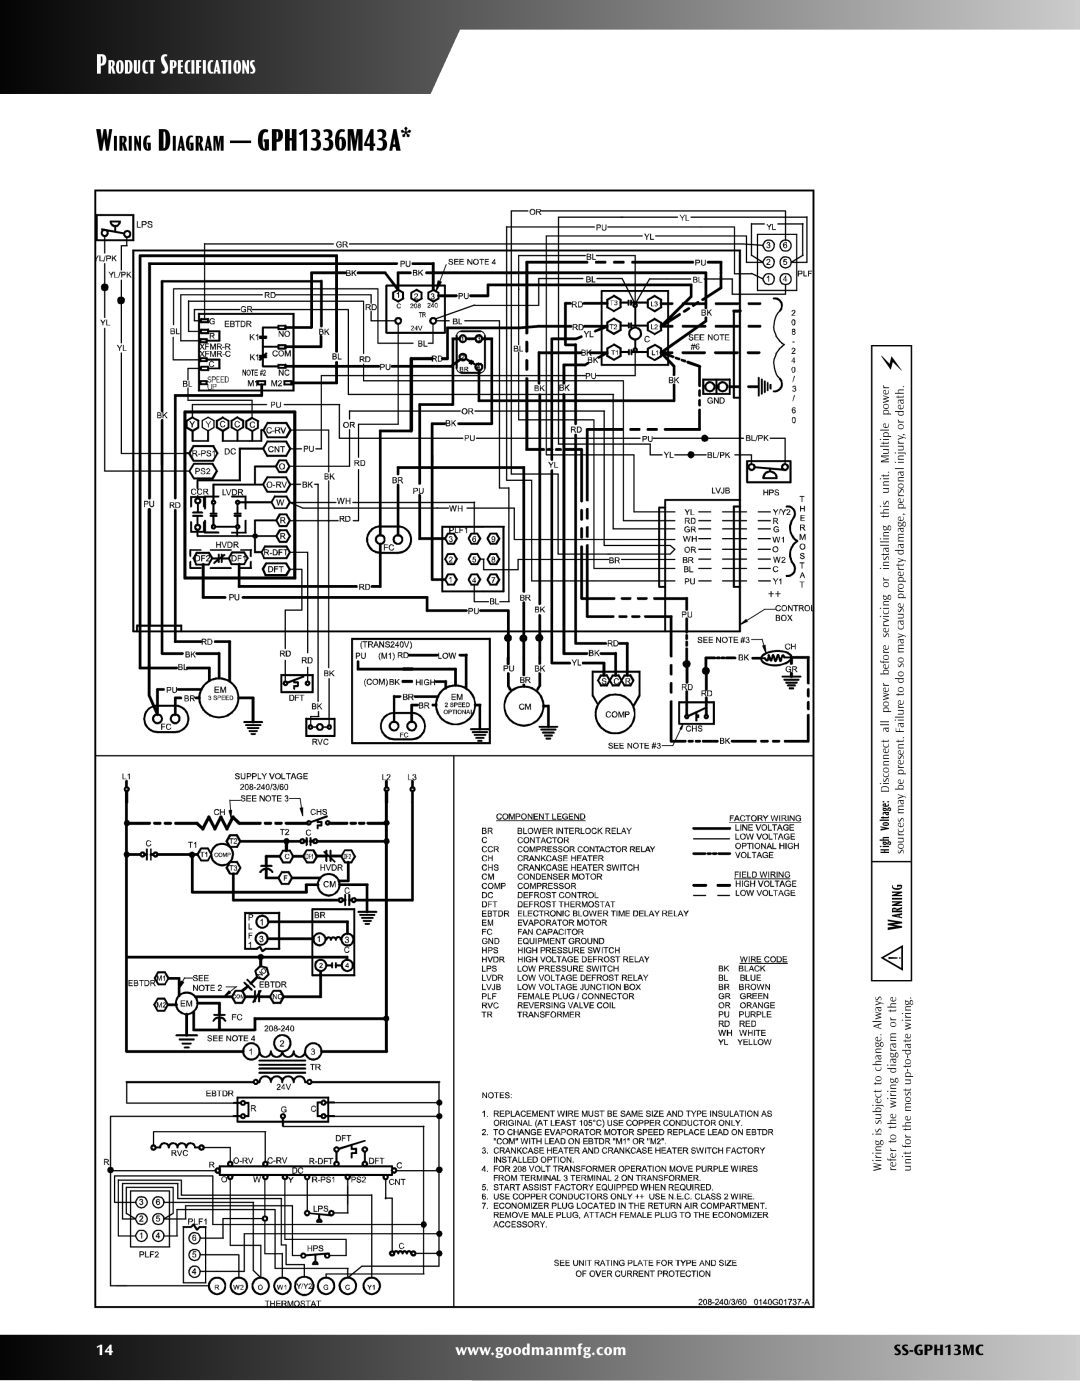 Goodman Mfg SS-GPH13MC warranty GPH1336M43A, Wiring, Product, Diagram, Specifications 